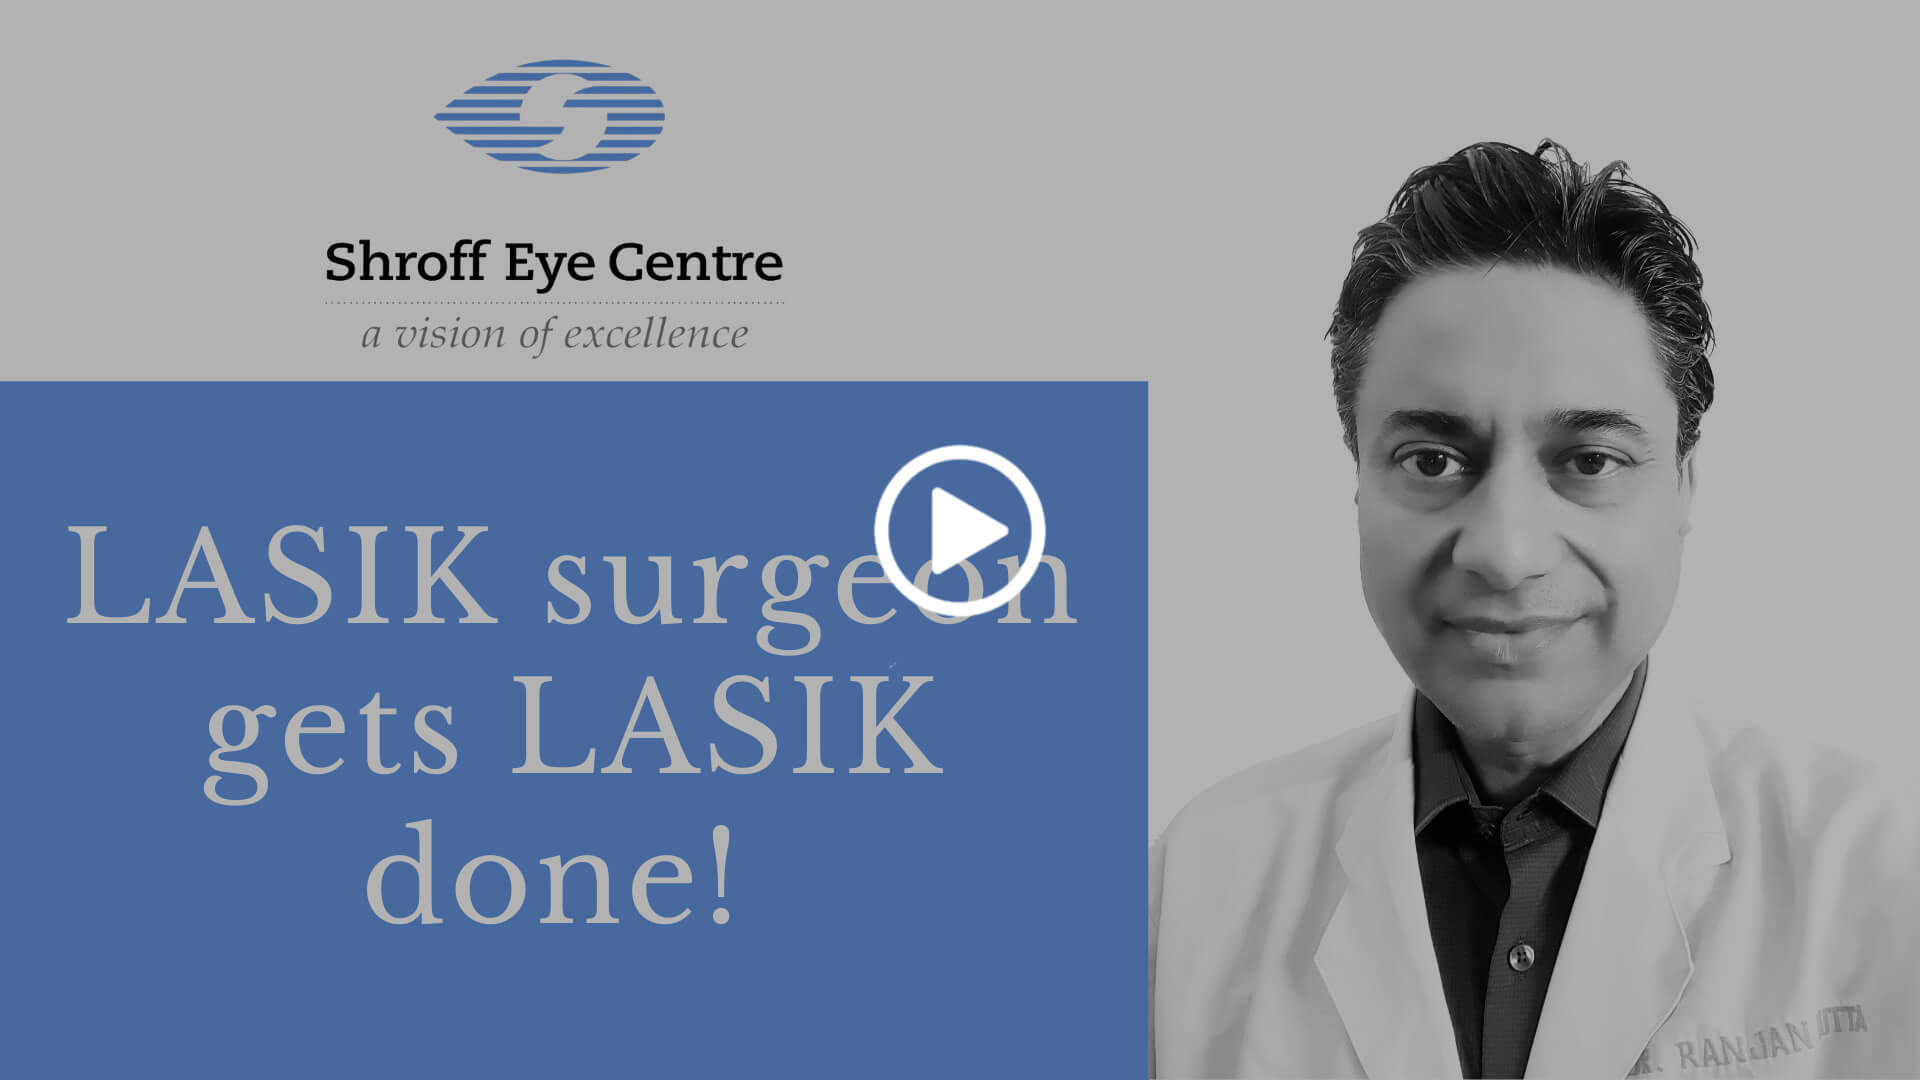 Dr. Ranjan - LASIK Surgeon gets LASIK done!